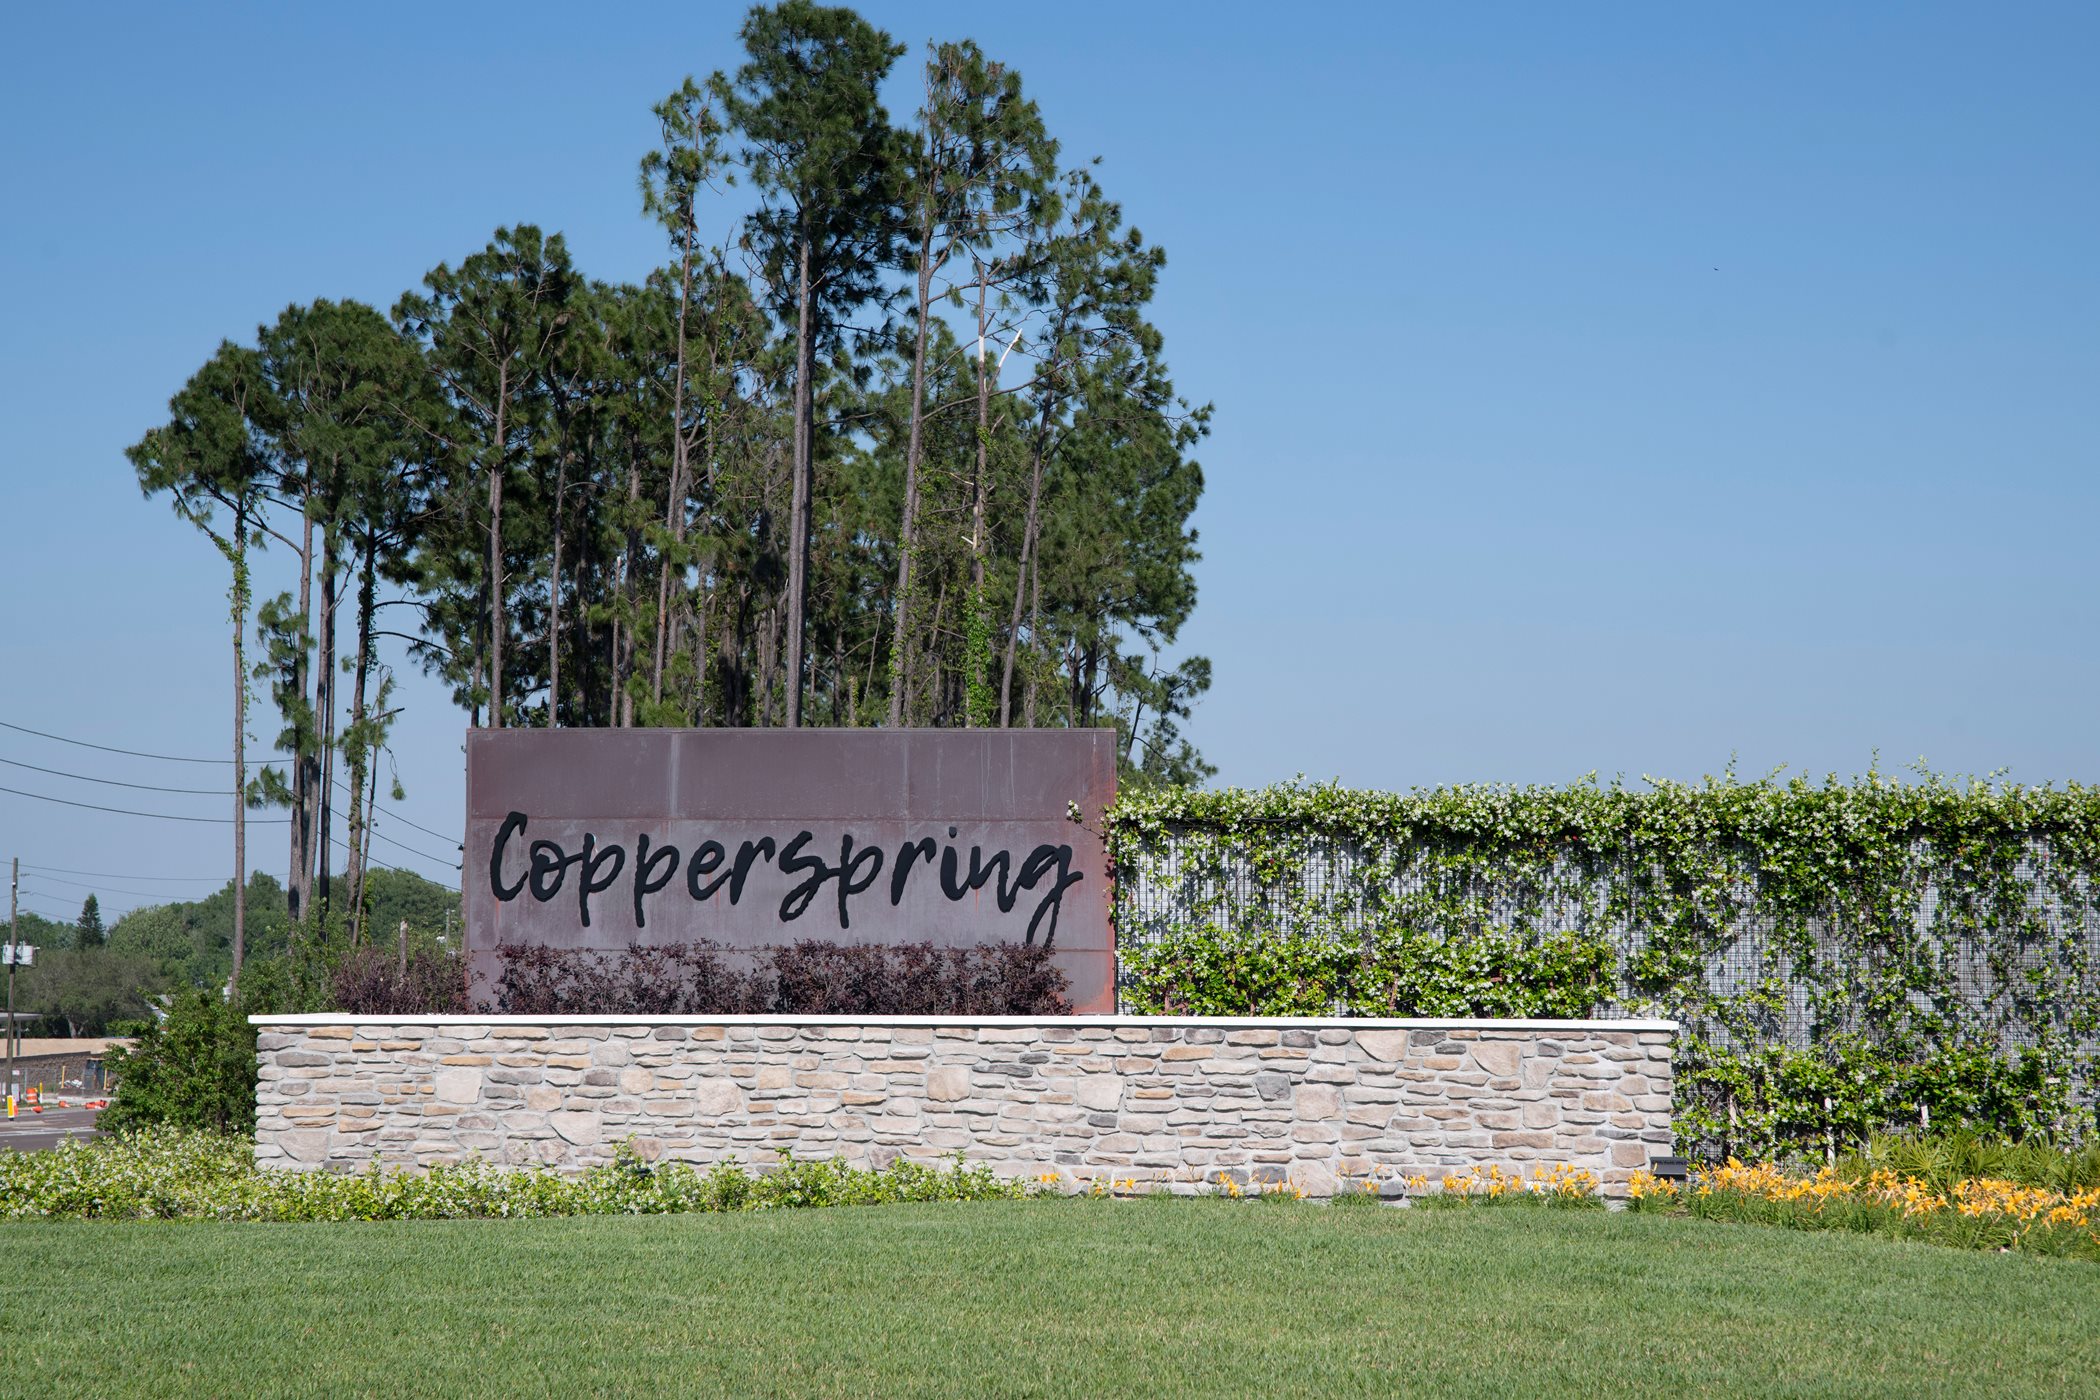 Copperspring sign